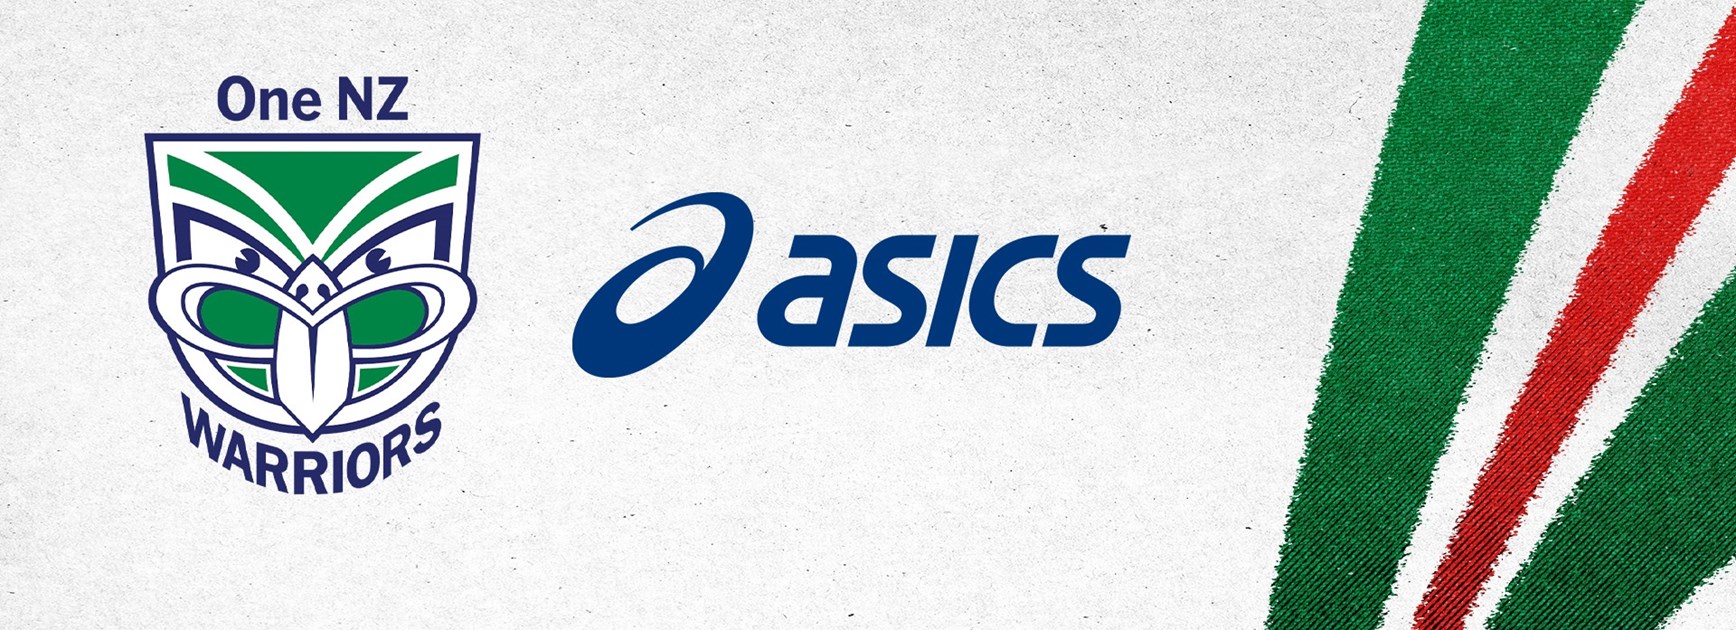 ASICS returns as club's footwear partner